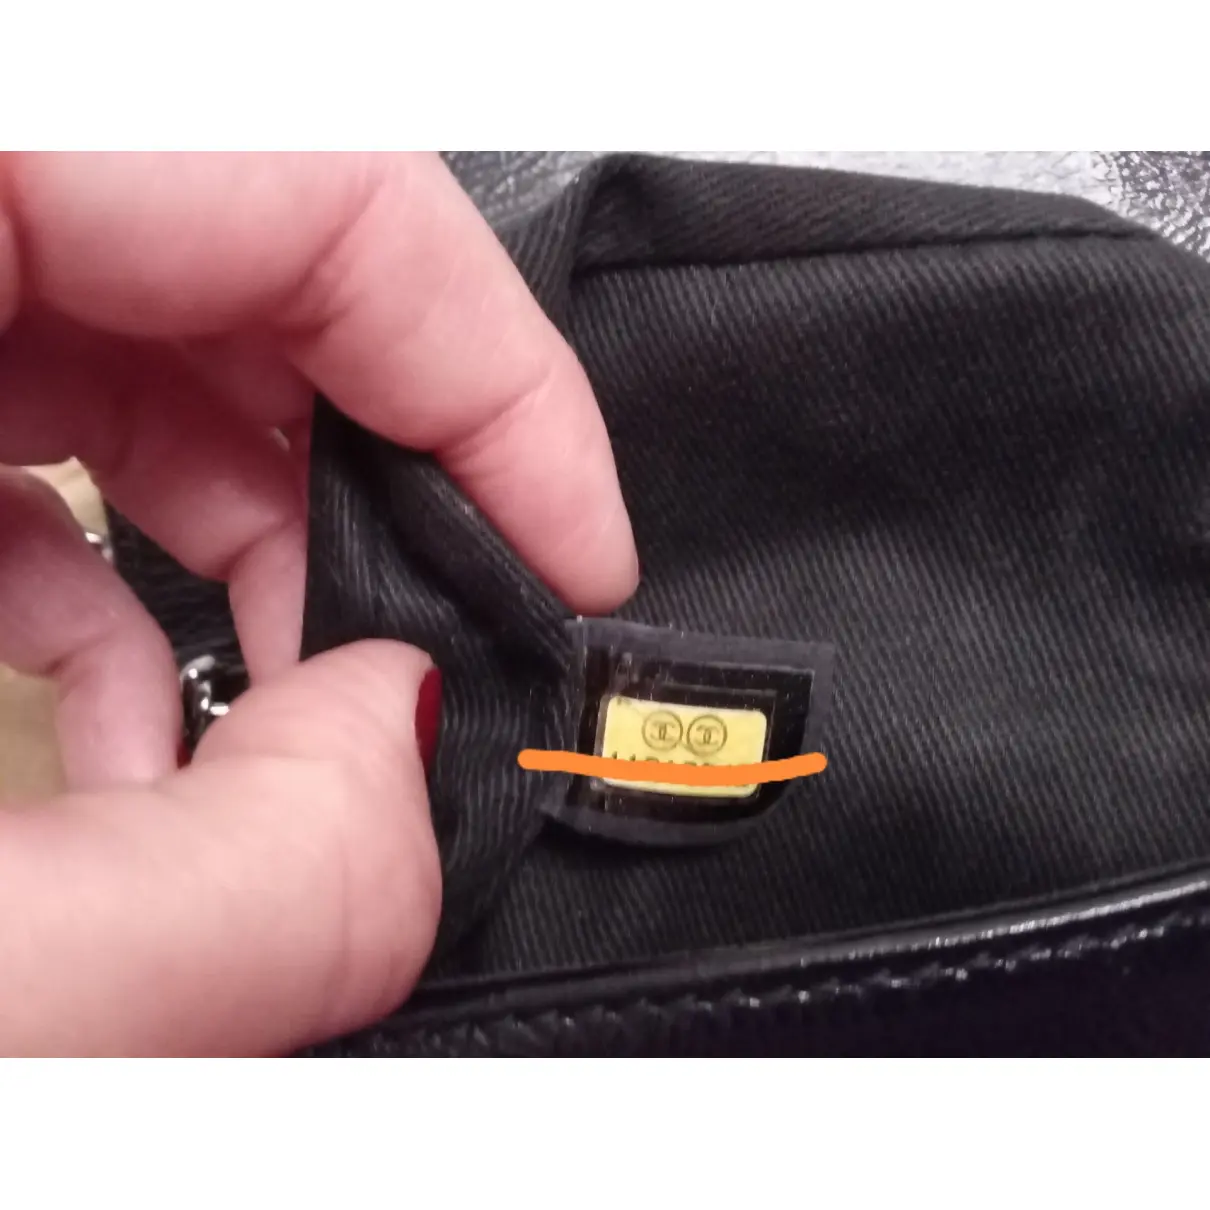 Buy Chanel Patent leather handbag online